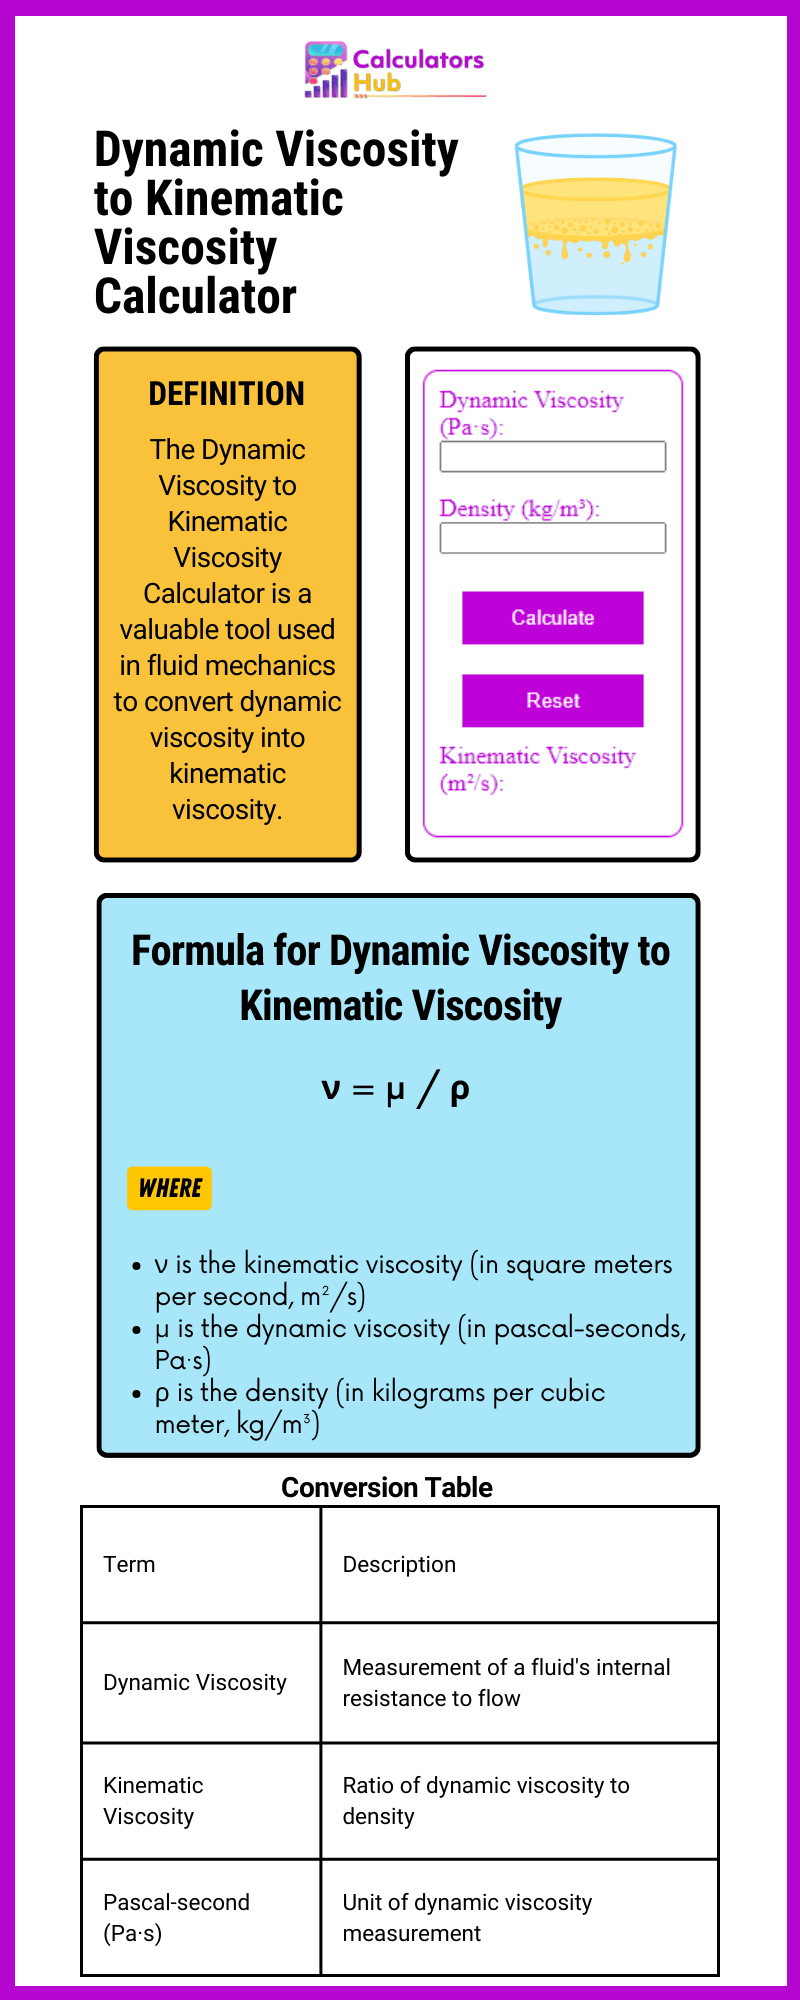 Dynamic Viscosity to Kinematic Viscosity Calculator